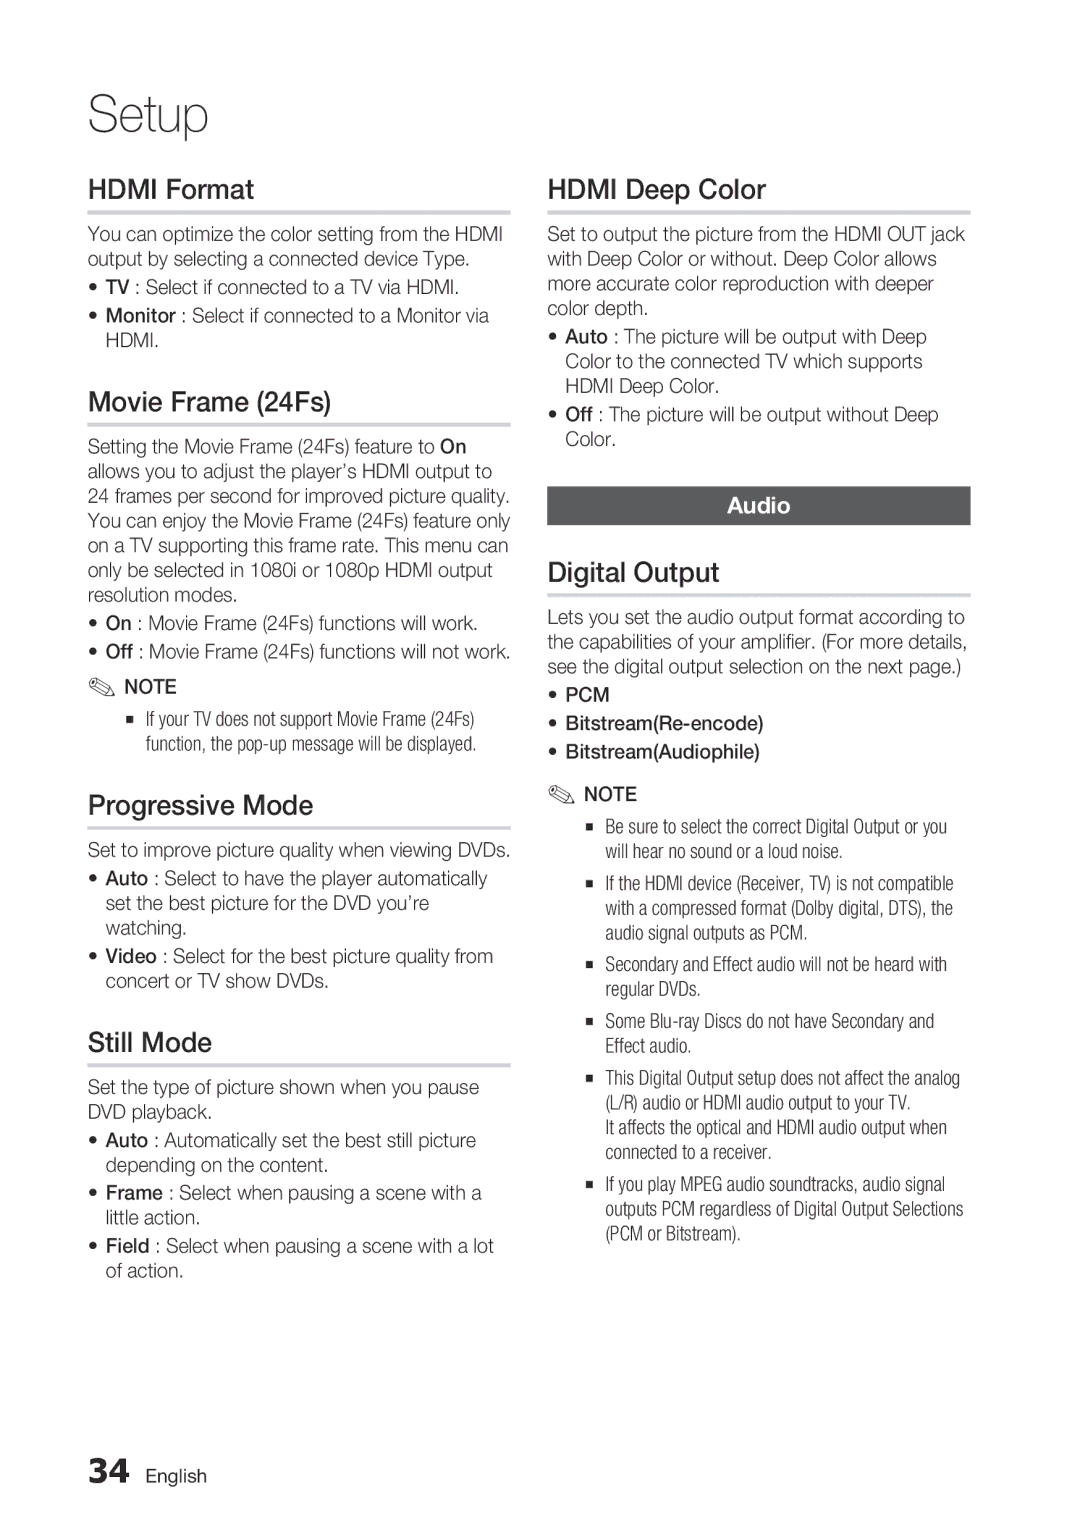 Samsung BD-C7500 user manual Hdmi Format, Movie Frame 24Fs, Progressive Mode, Still Mode, Hdmi Deep Color, Digital Output 